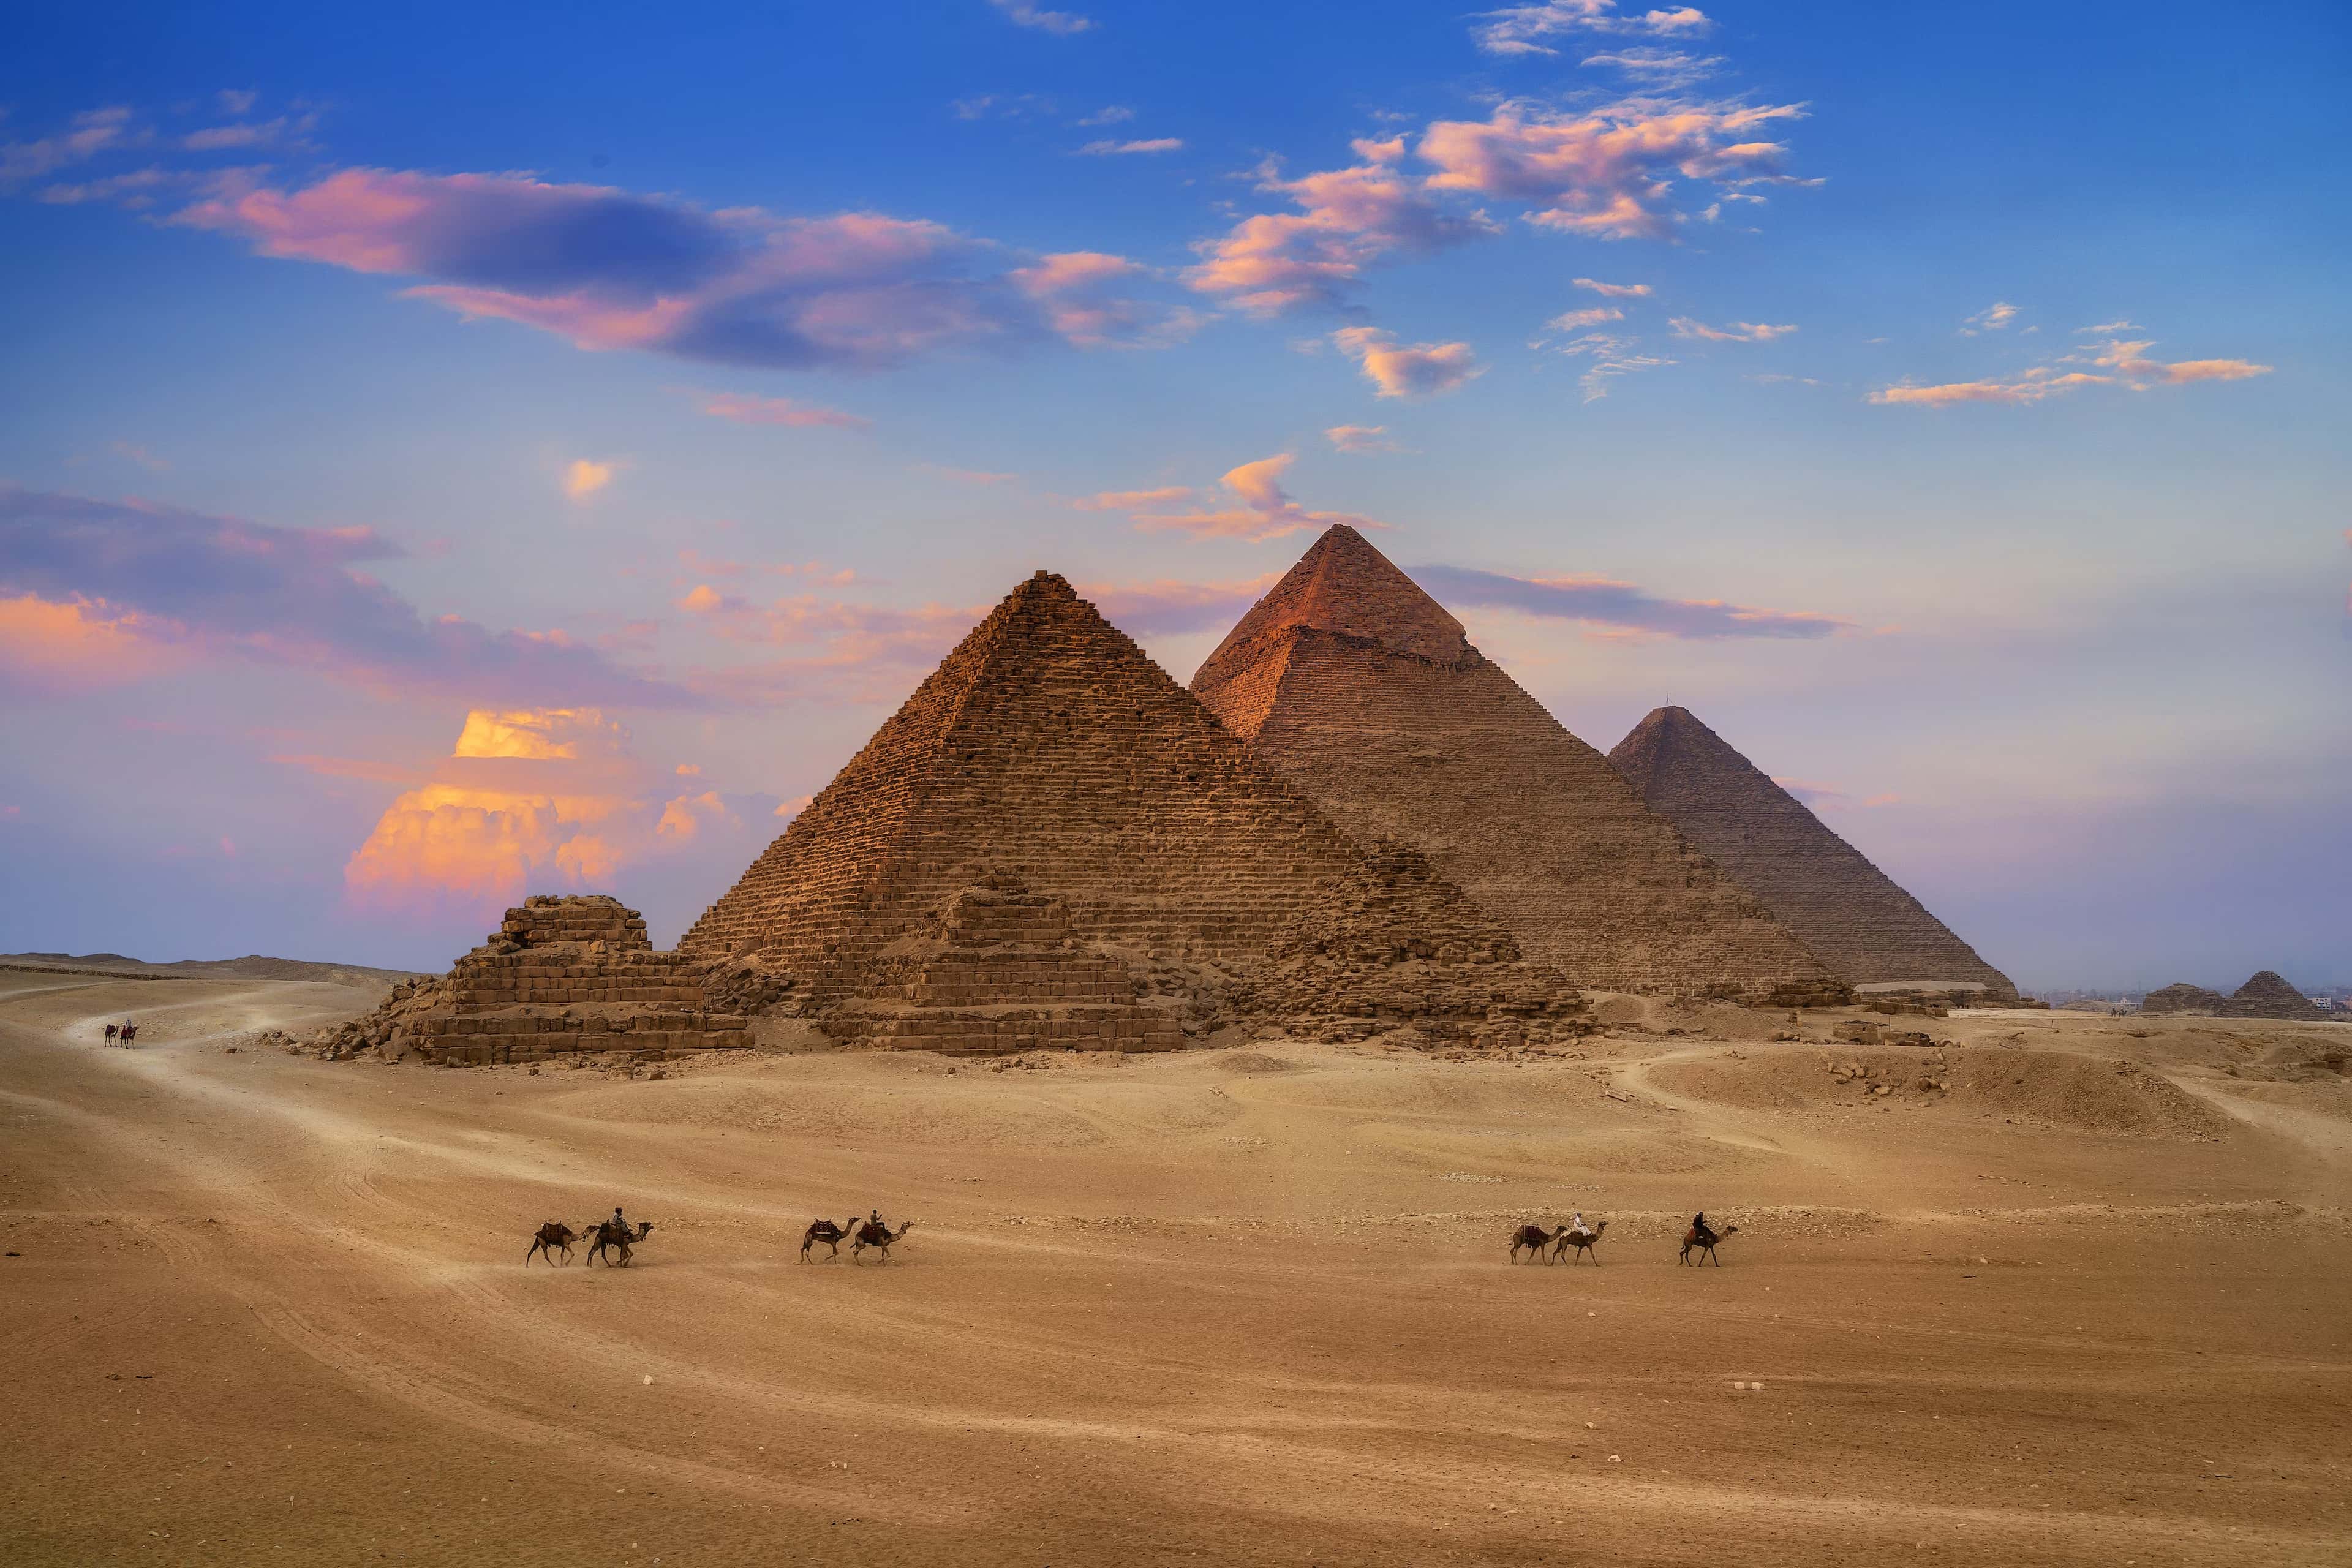 The Pyramids Of Egypt | The Egyptian Pyramids | The Pyramids Of Ancient Egypt | Facts about the Pyramids of Giza